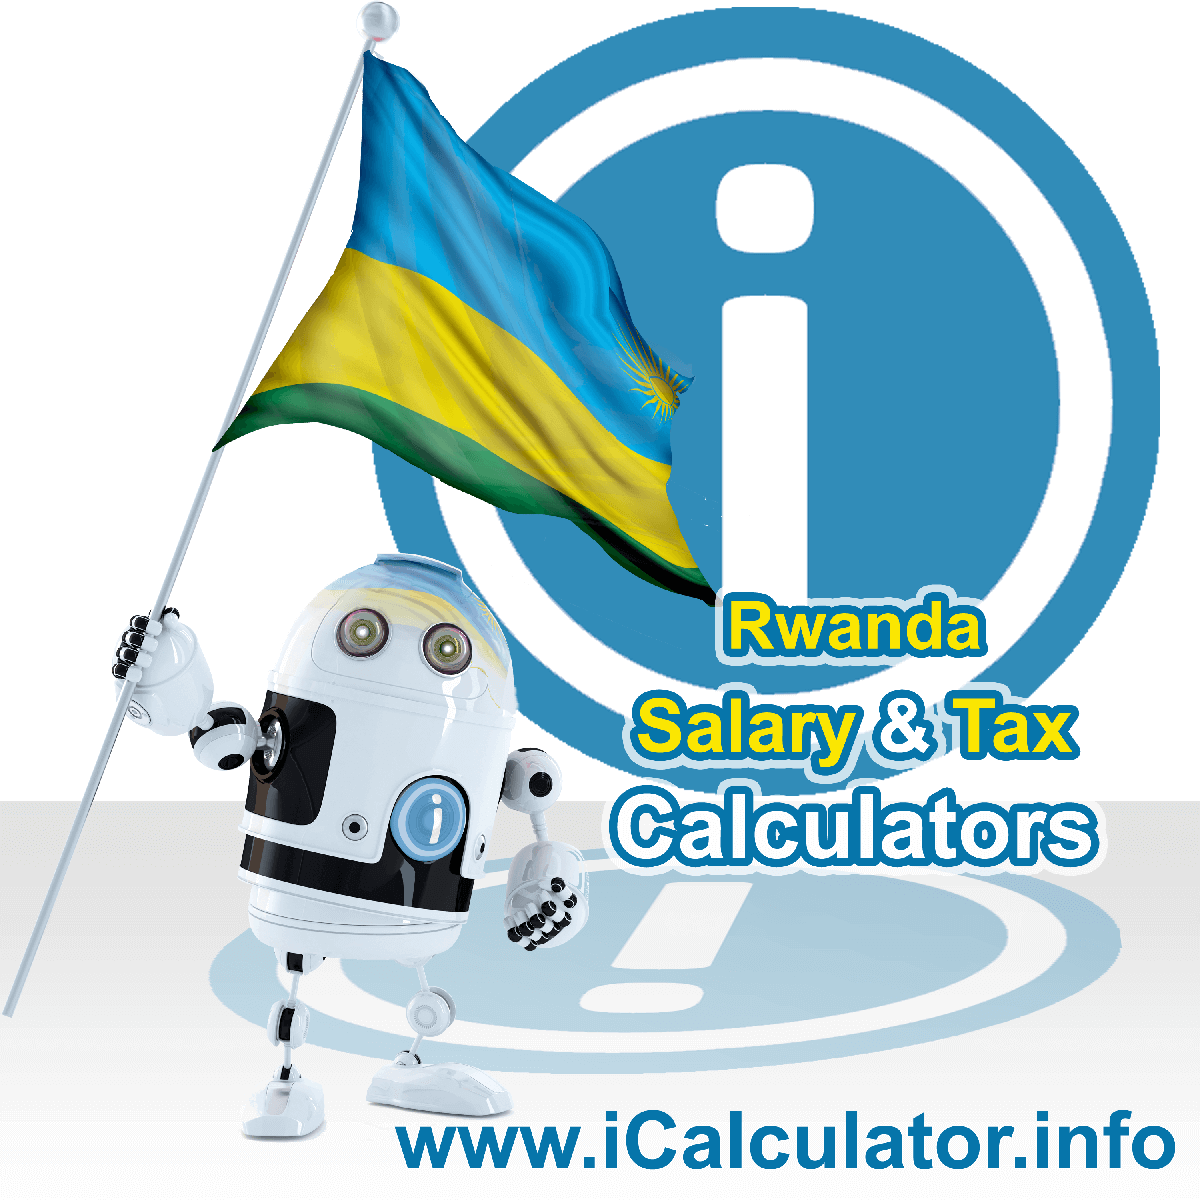 Rwanda Wage Calculator. This image shows the Rwanda flag and information relating to the tax formula for the Rwanda Tax Calculator